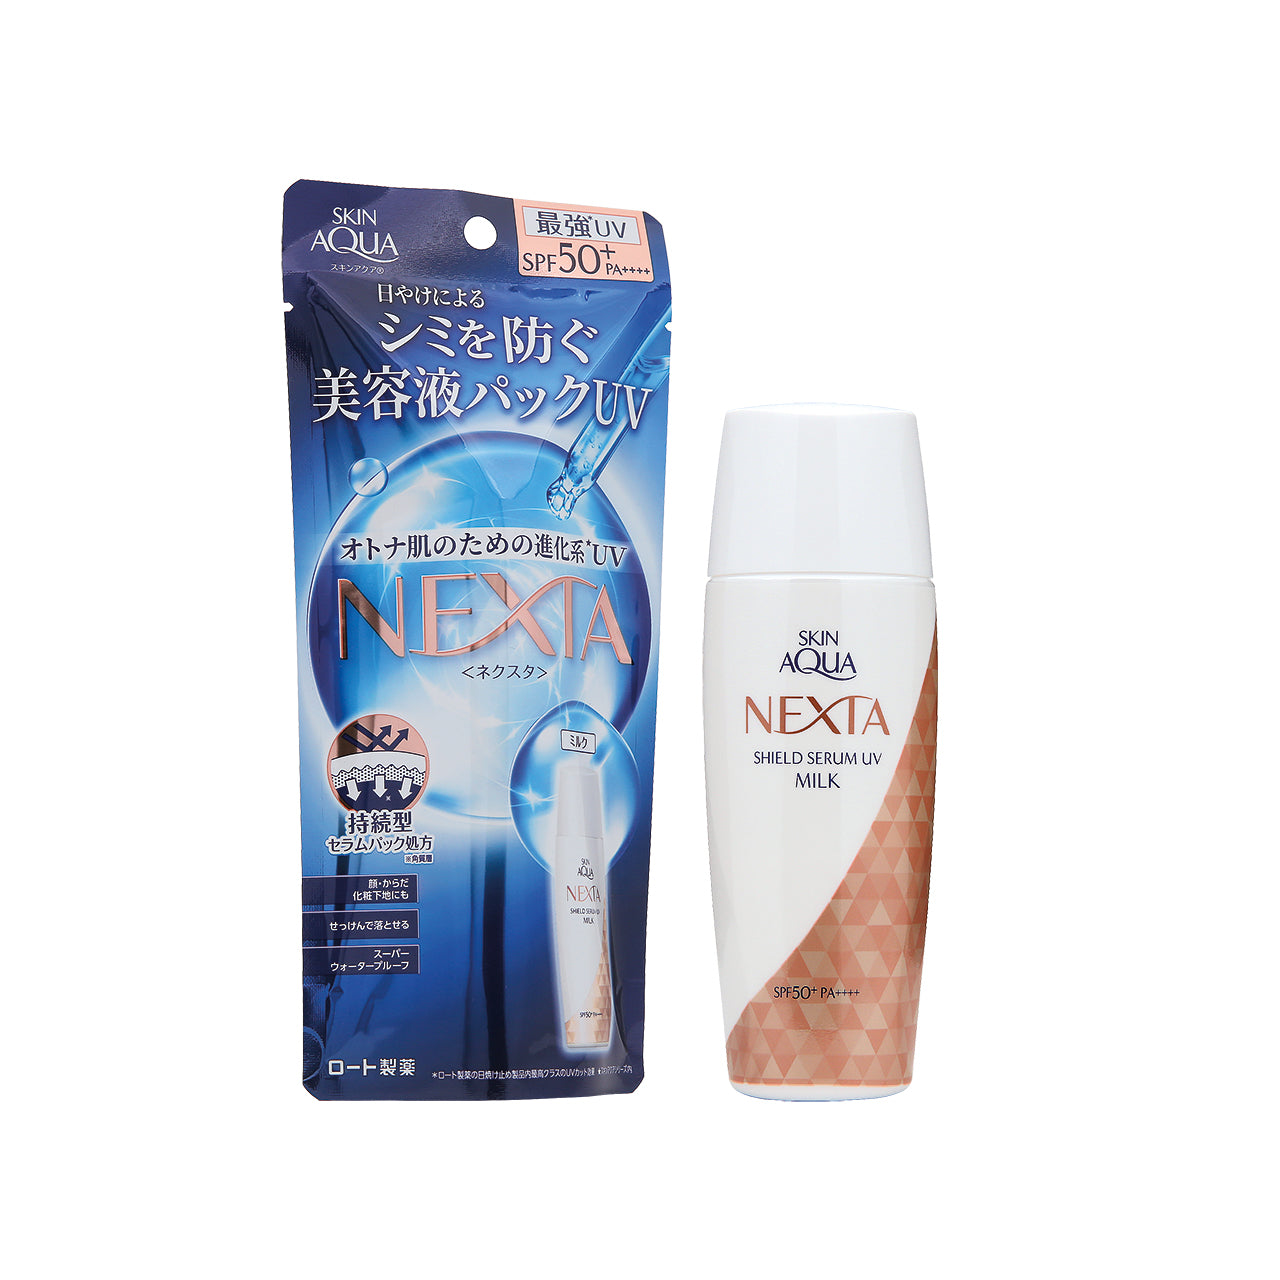 Mentholatum Sunplay Skin Aqua SPF50+ PA++++ Nexta Shield UV Milk 50ml